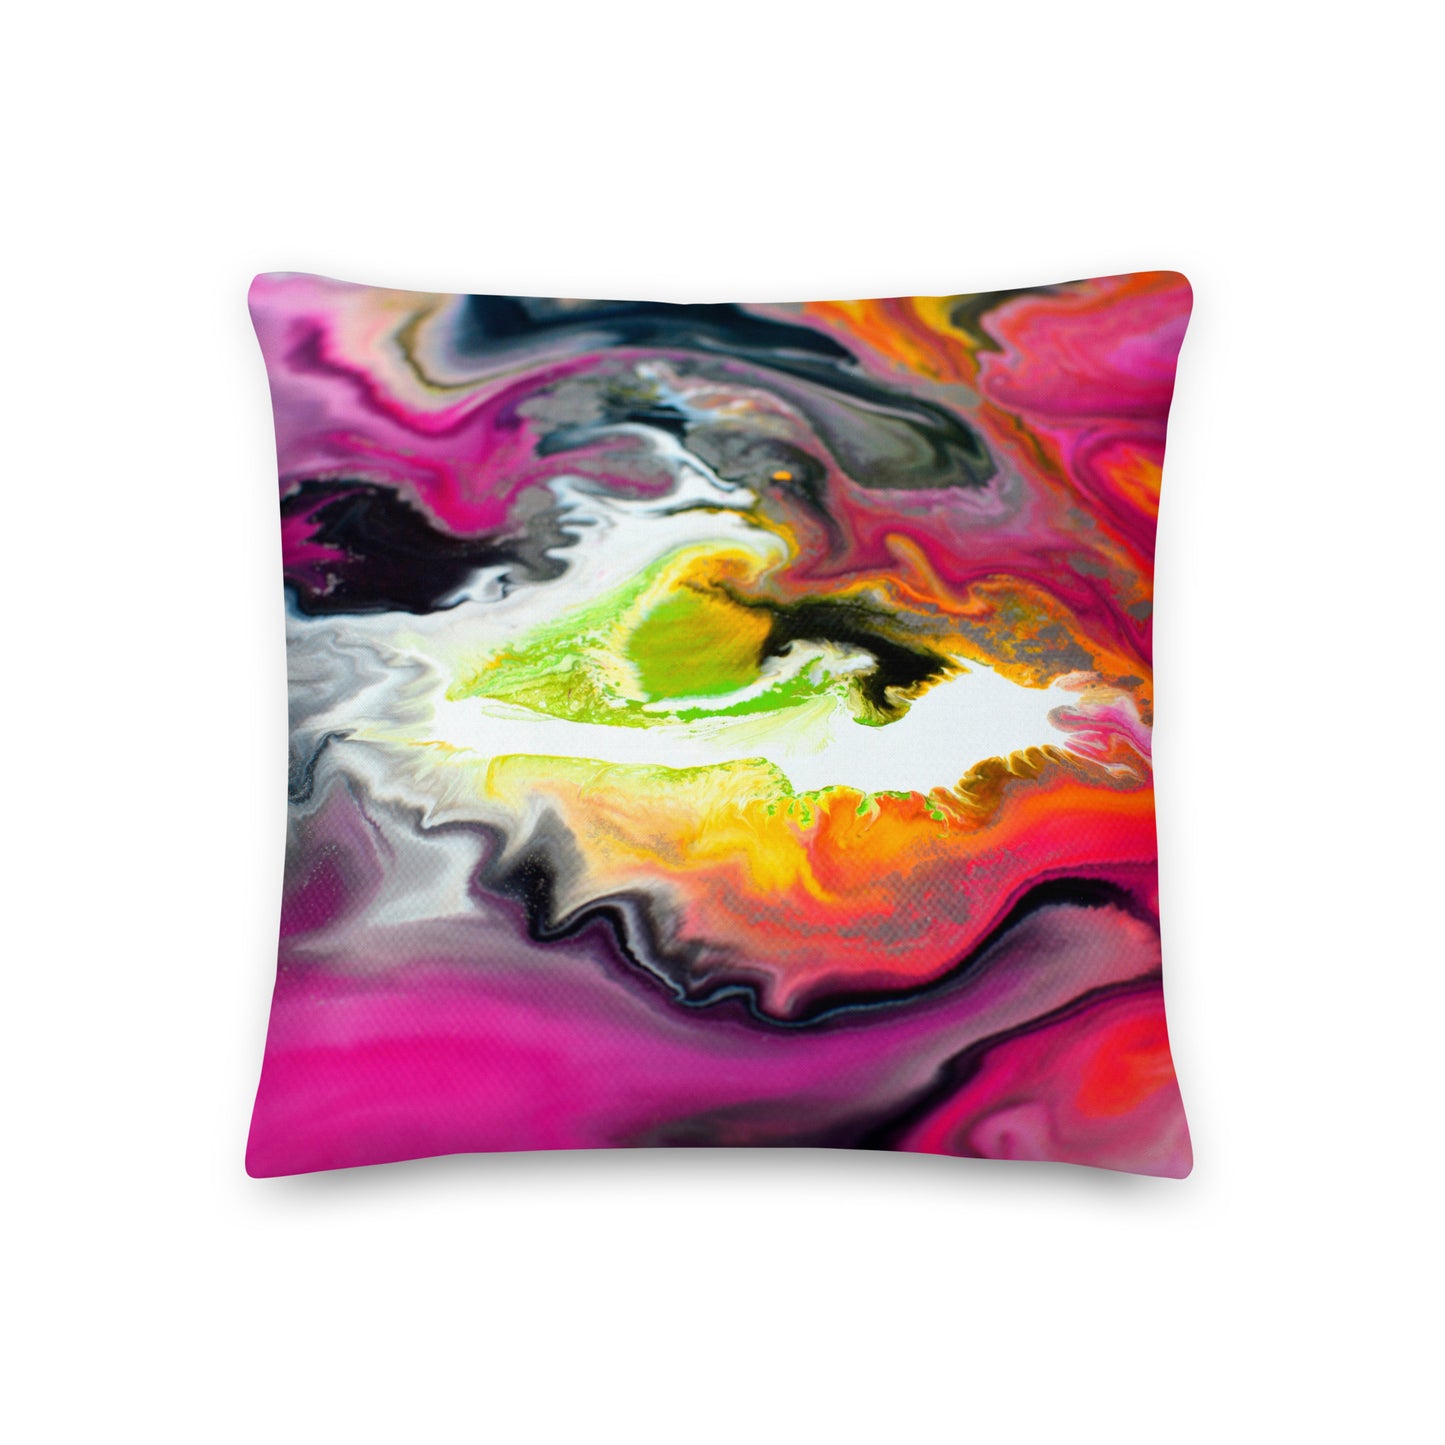 Premium Pillow - Pink and yellow design